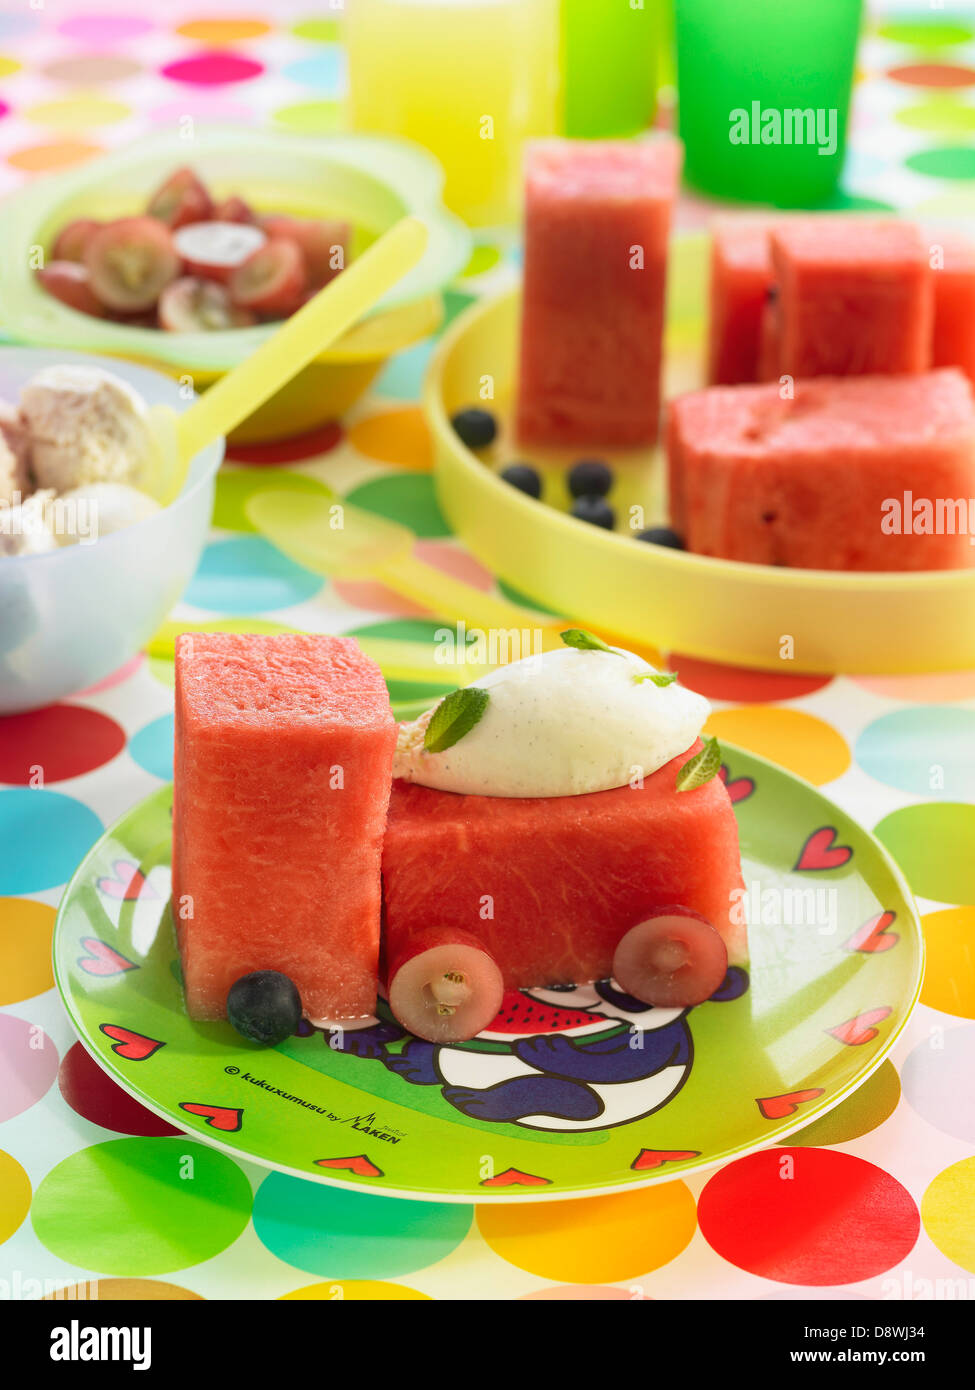 Lorry-shaped watermelon and ice cream dessert Stock Photo